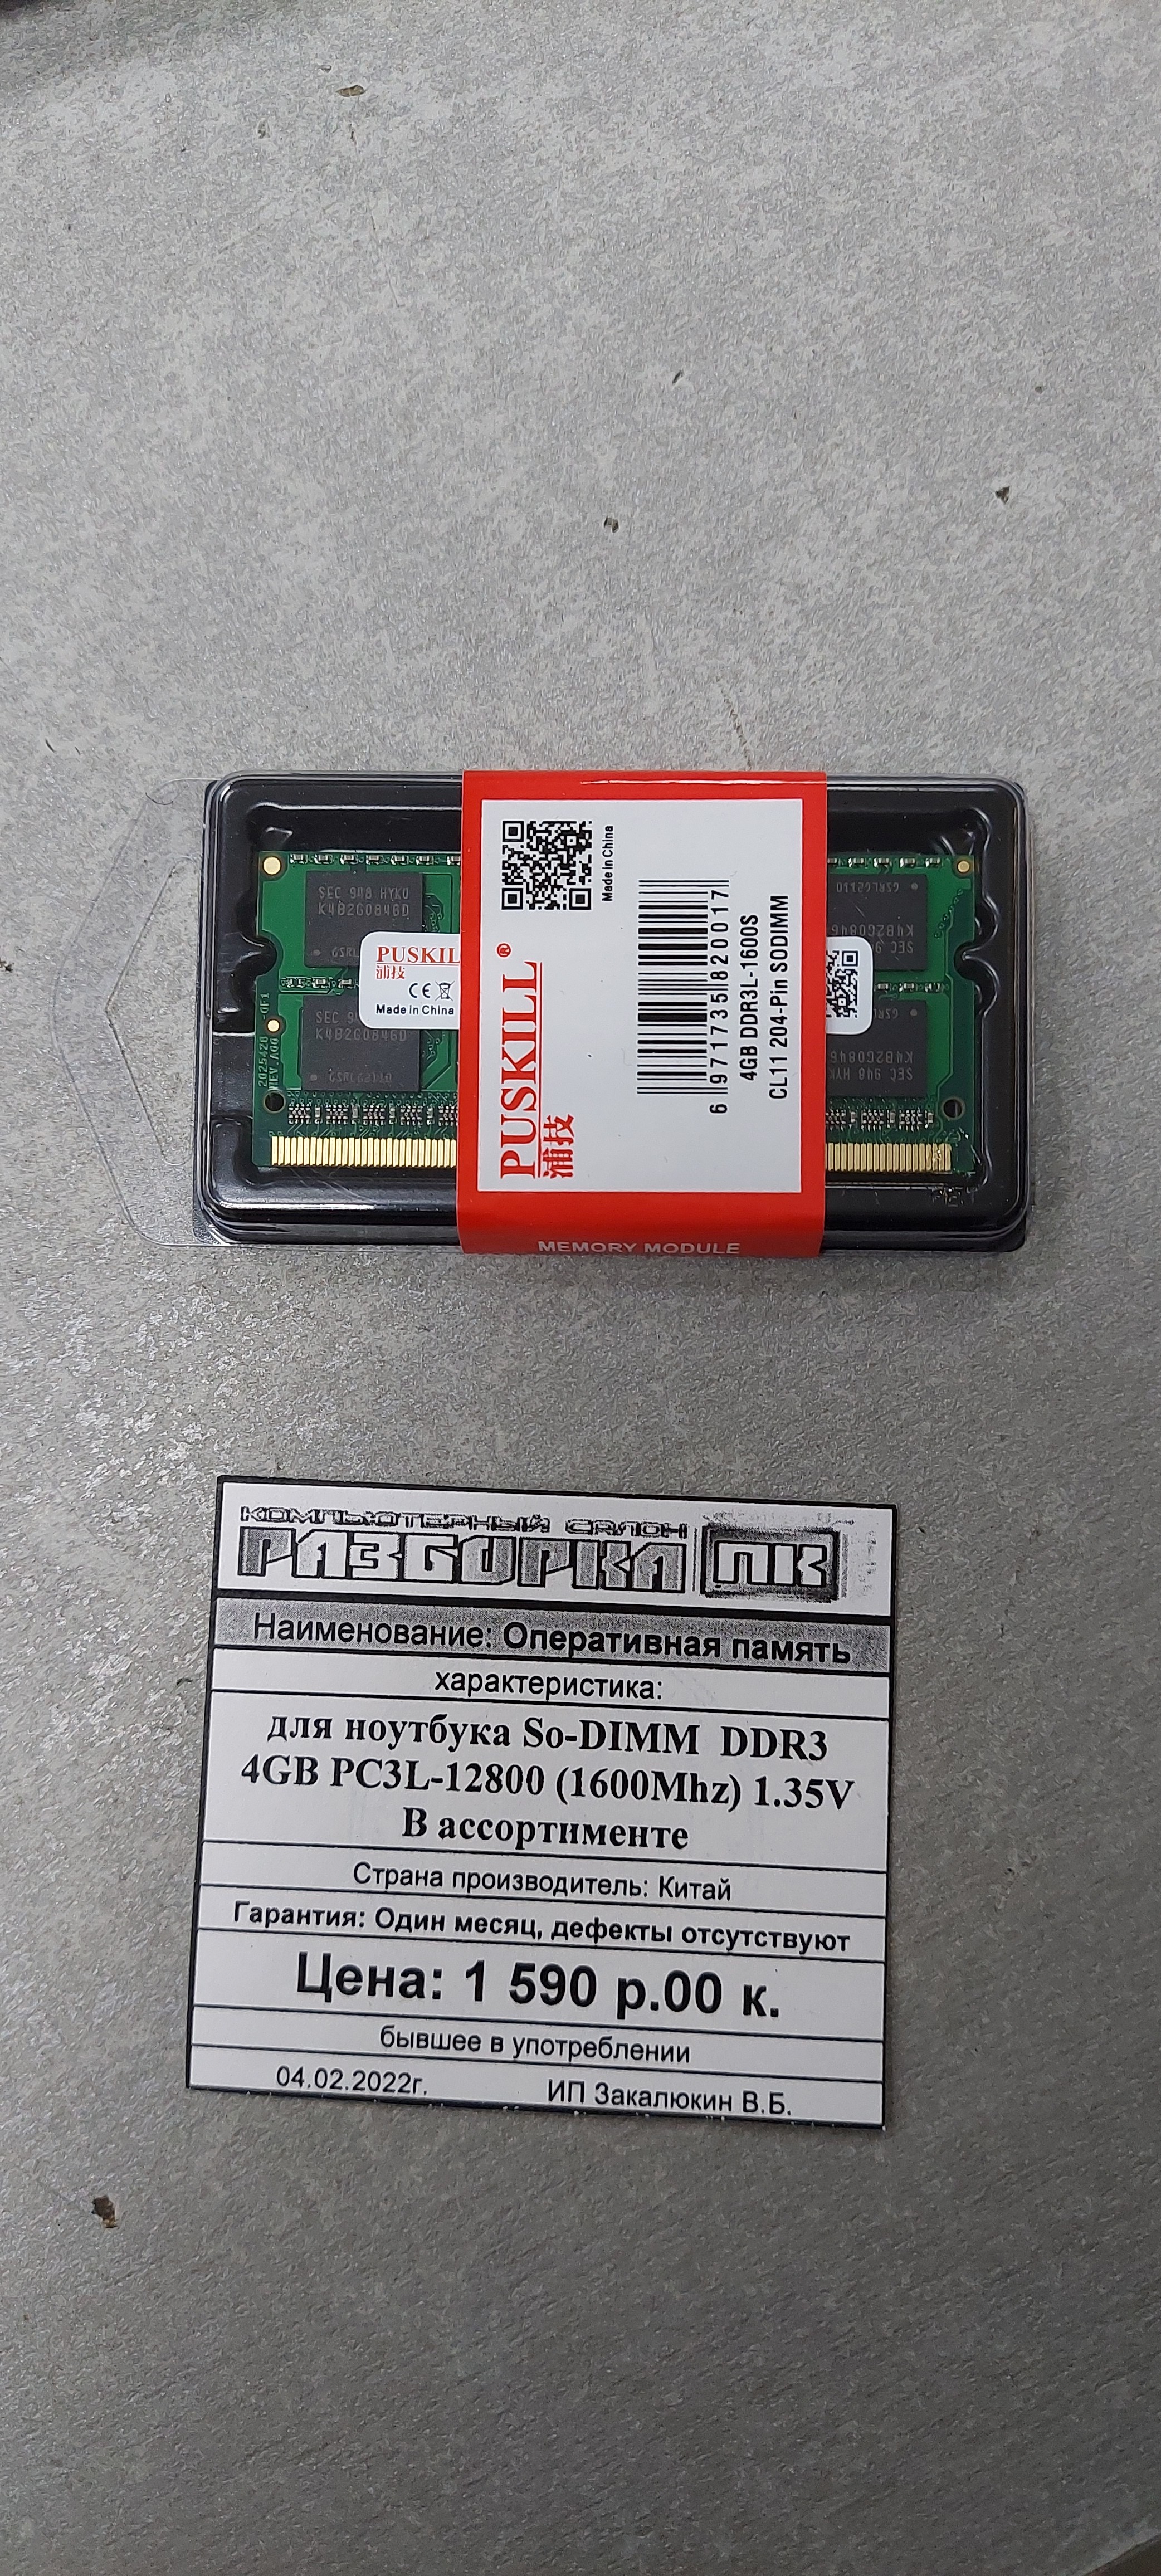 Оперативная память So-DIMM DDR3 4GB PC3L-12800 (1600Mhz)